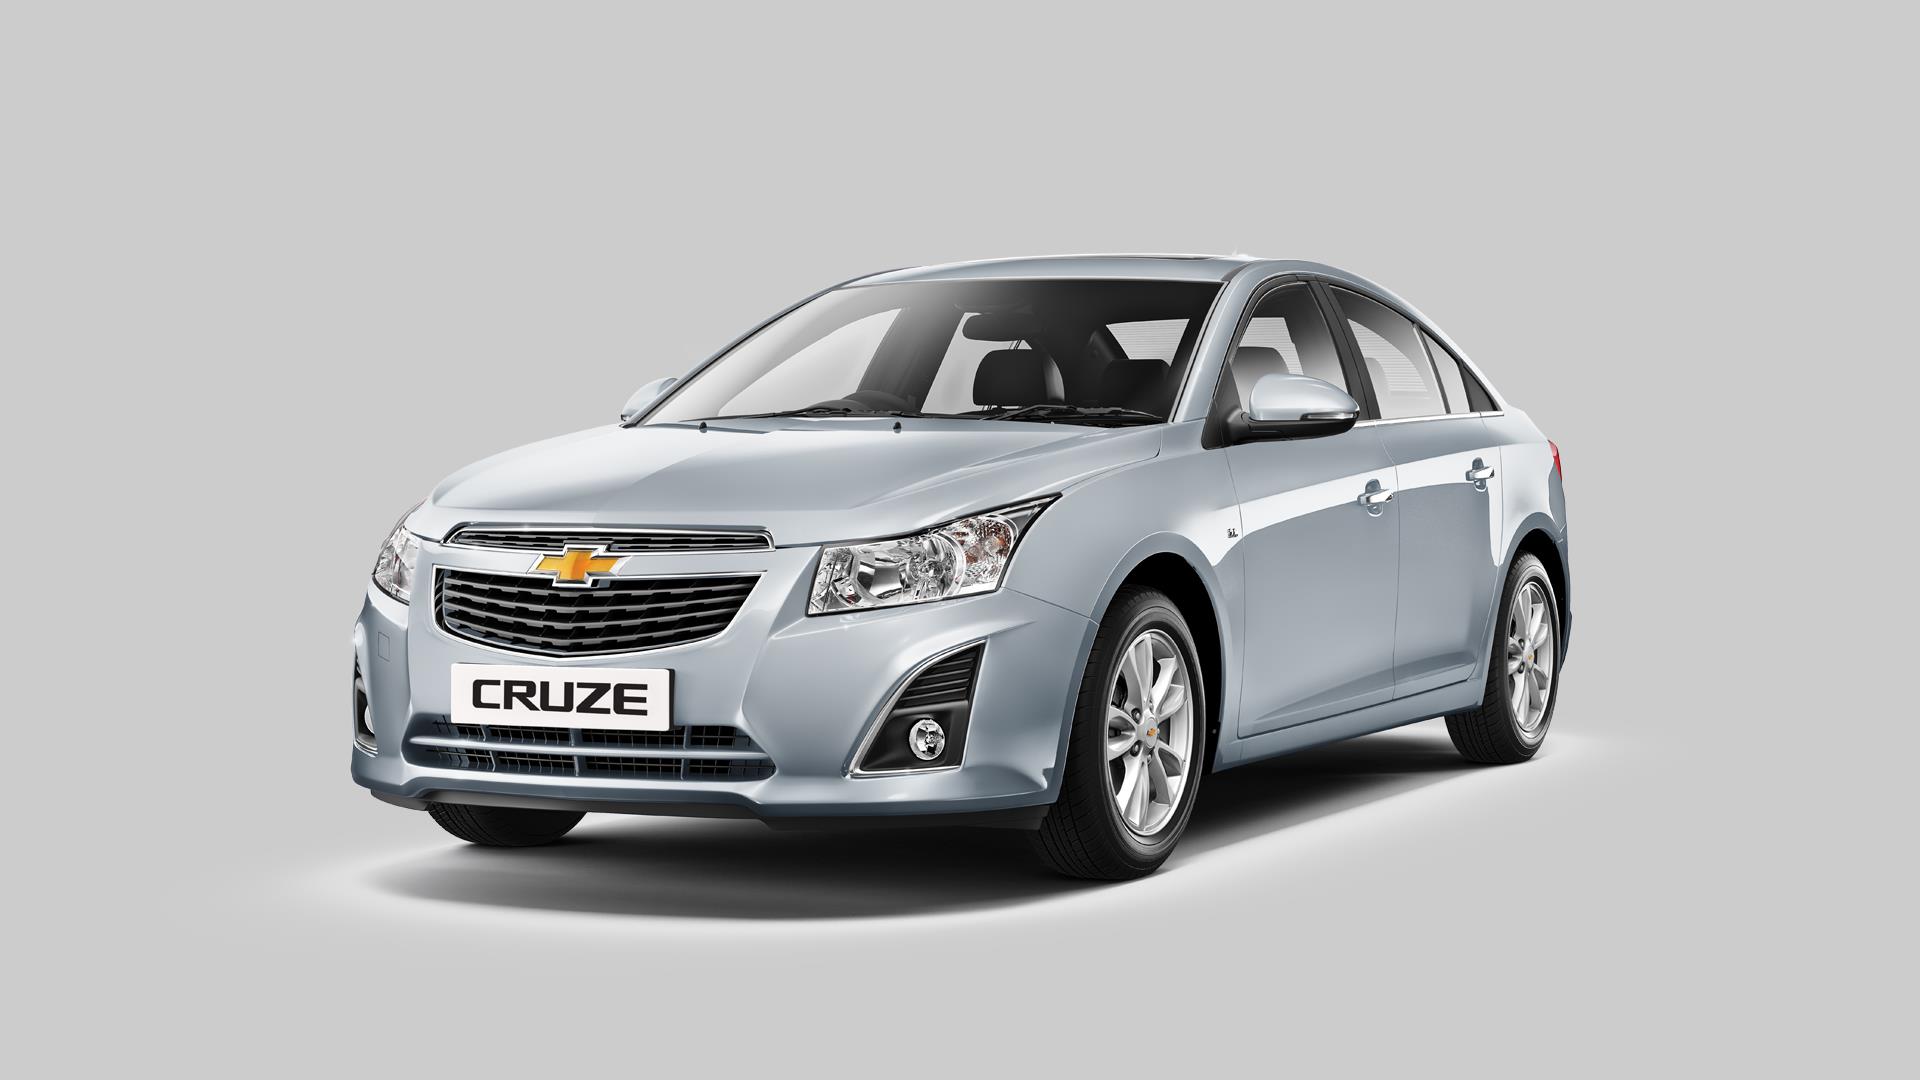 Chevrolet Cruze Price, Specs, Review, Pics & Mileage in India